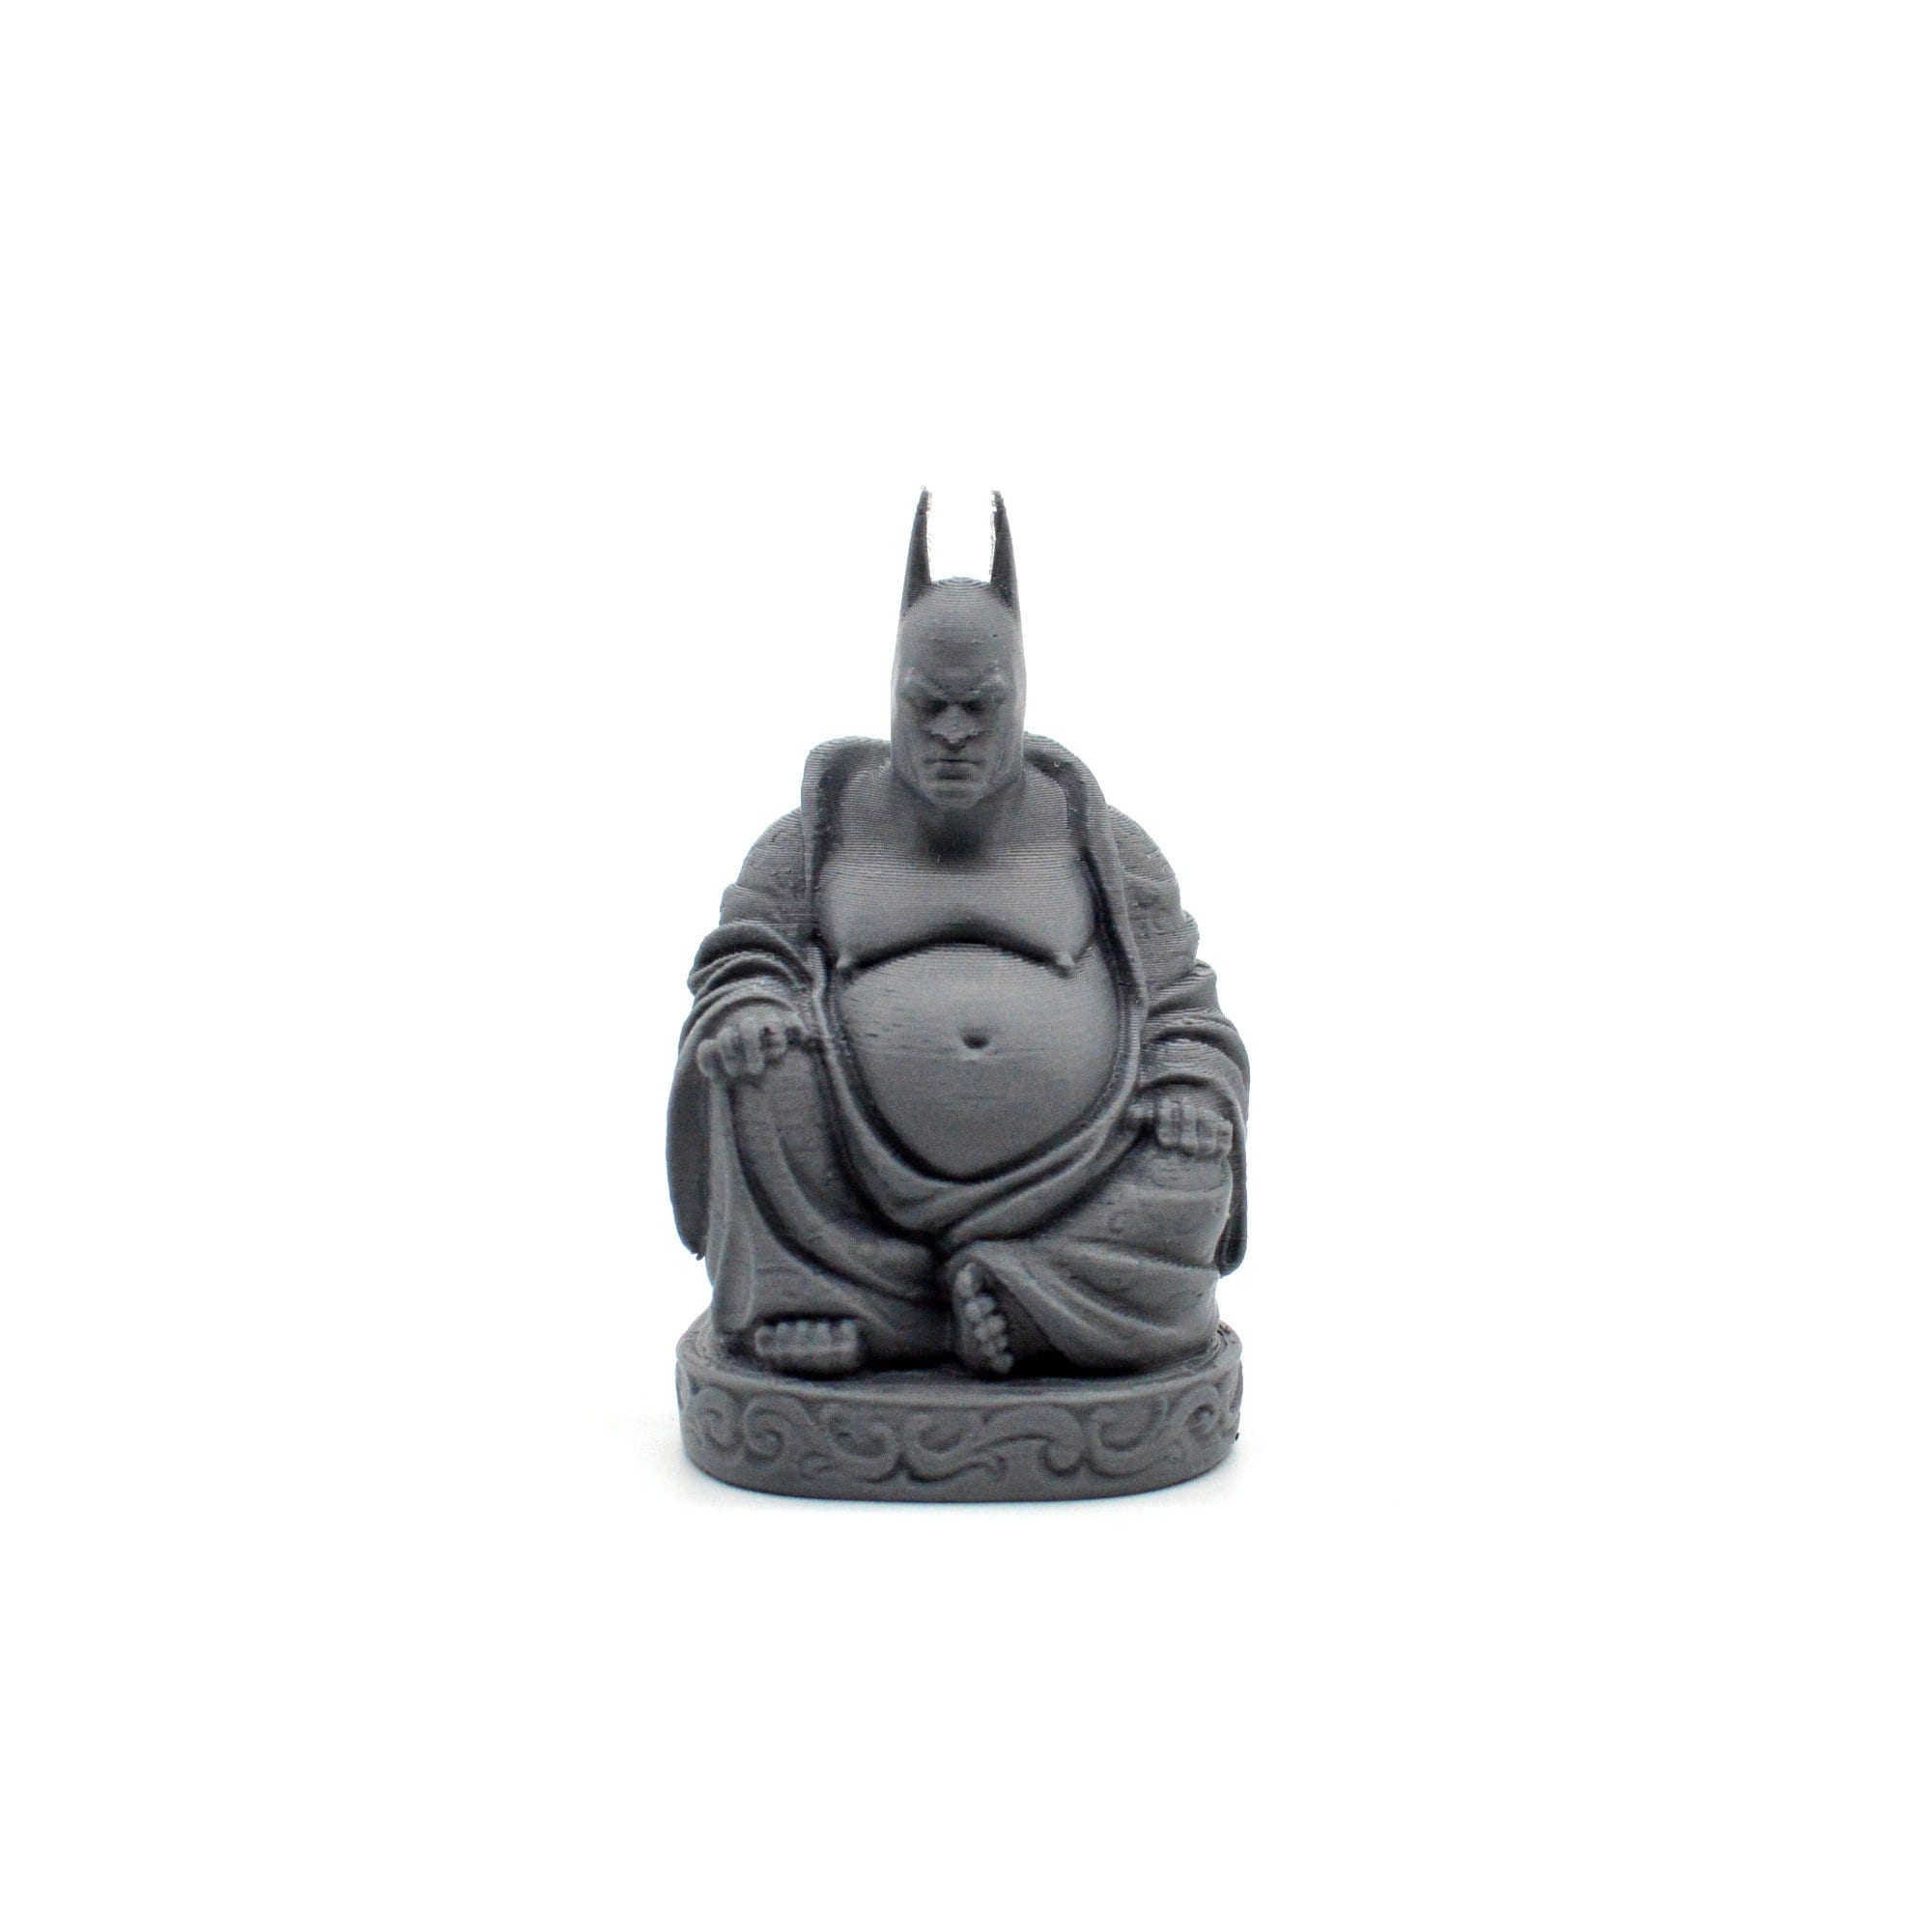 Bat Buddha Model - 3D Print Statue for Office, Dorm or Bedroom